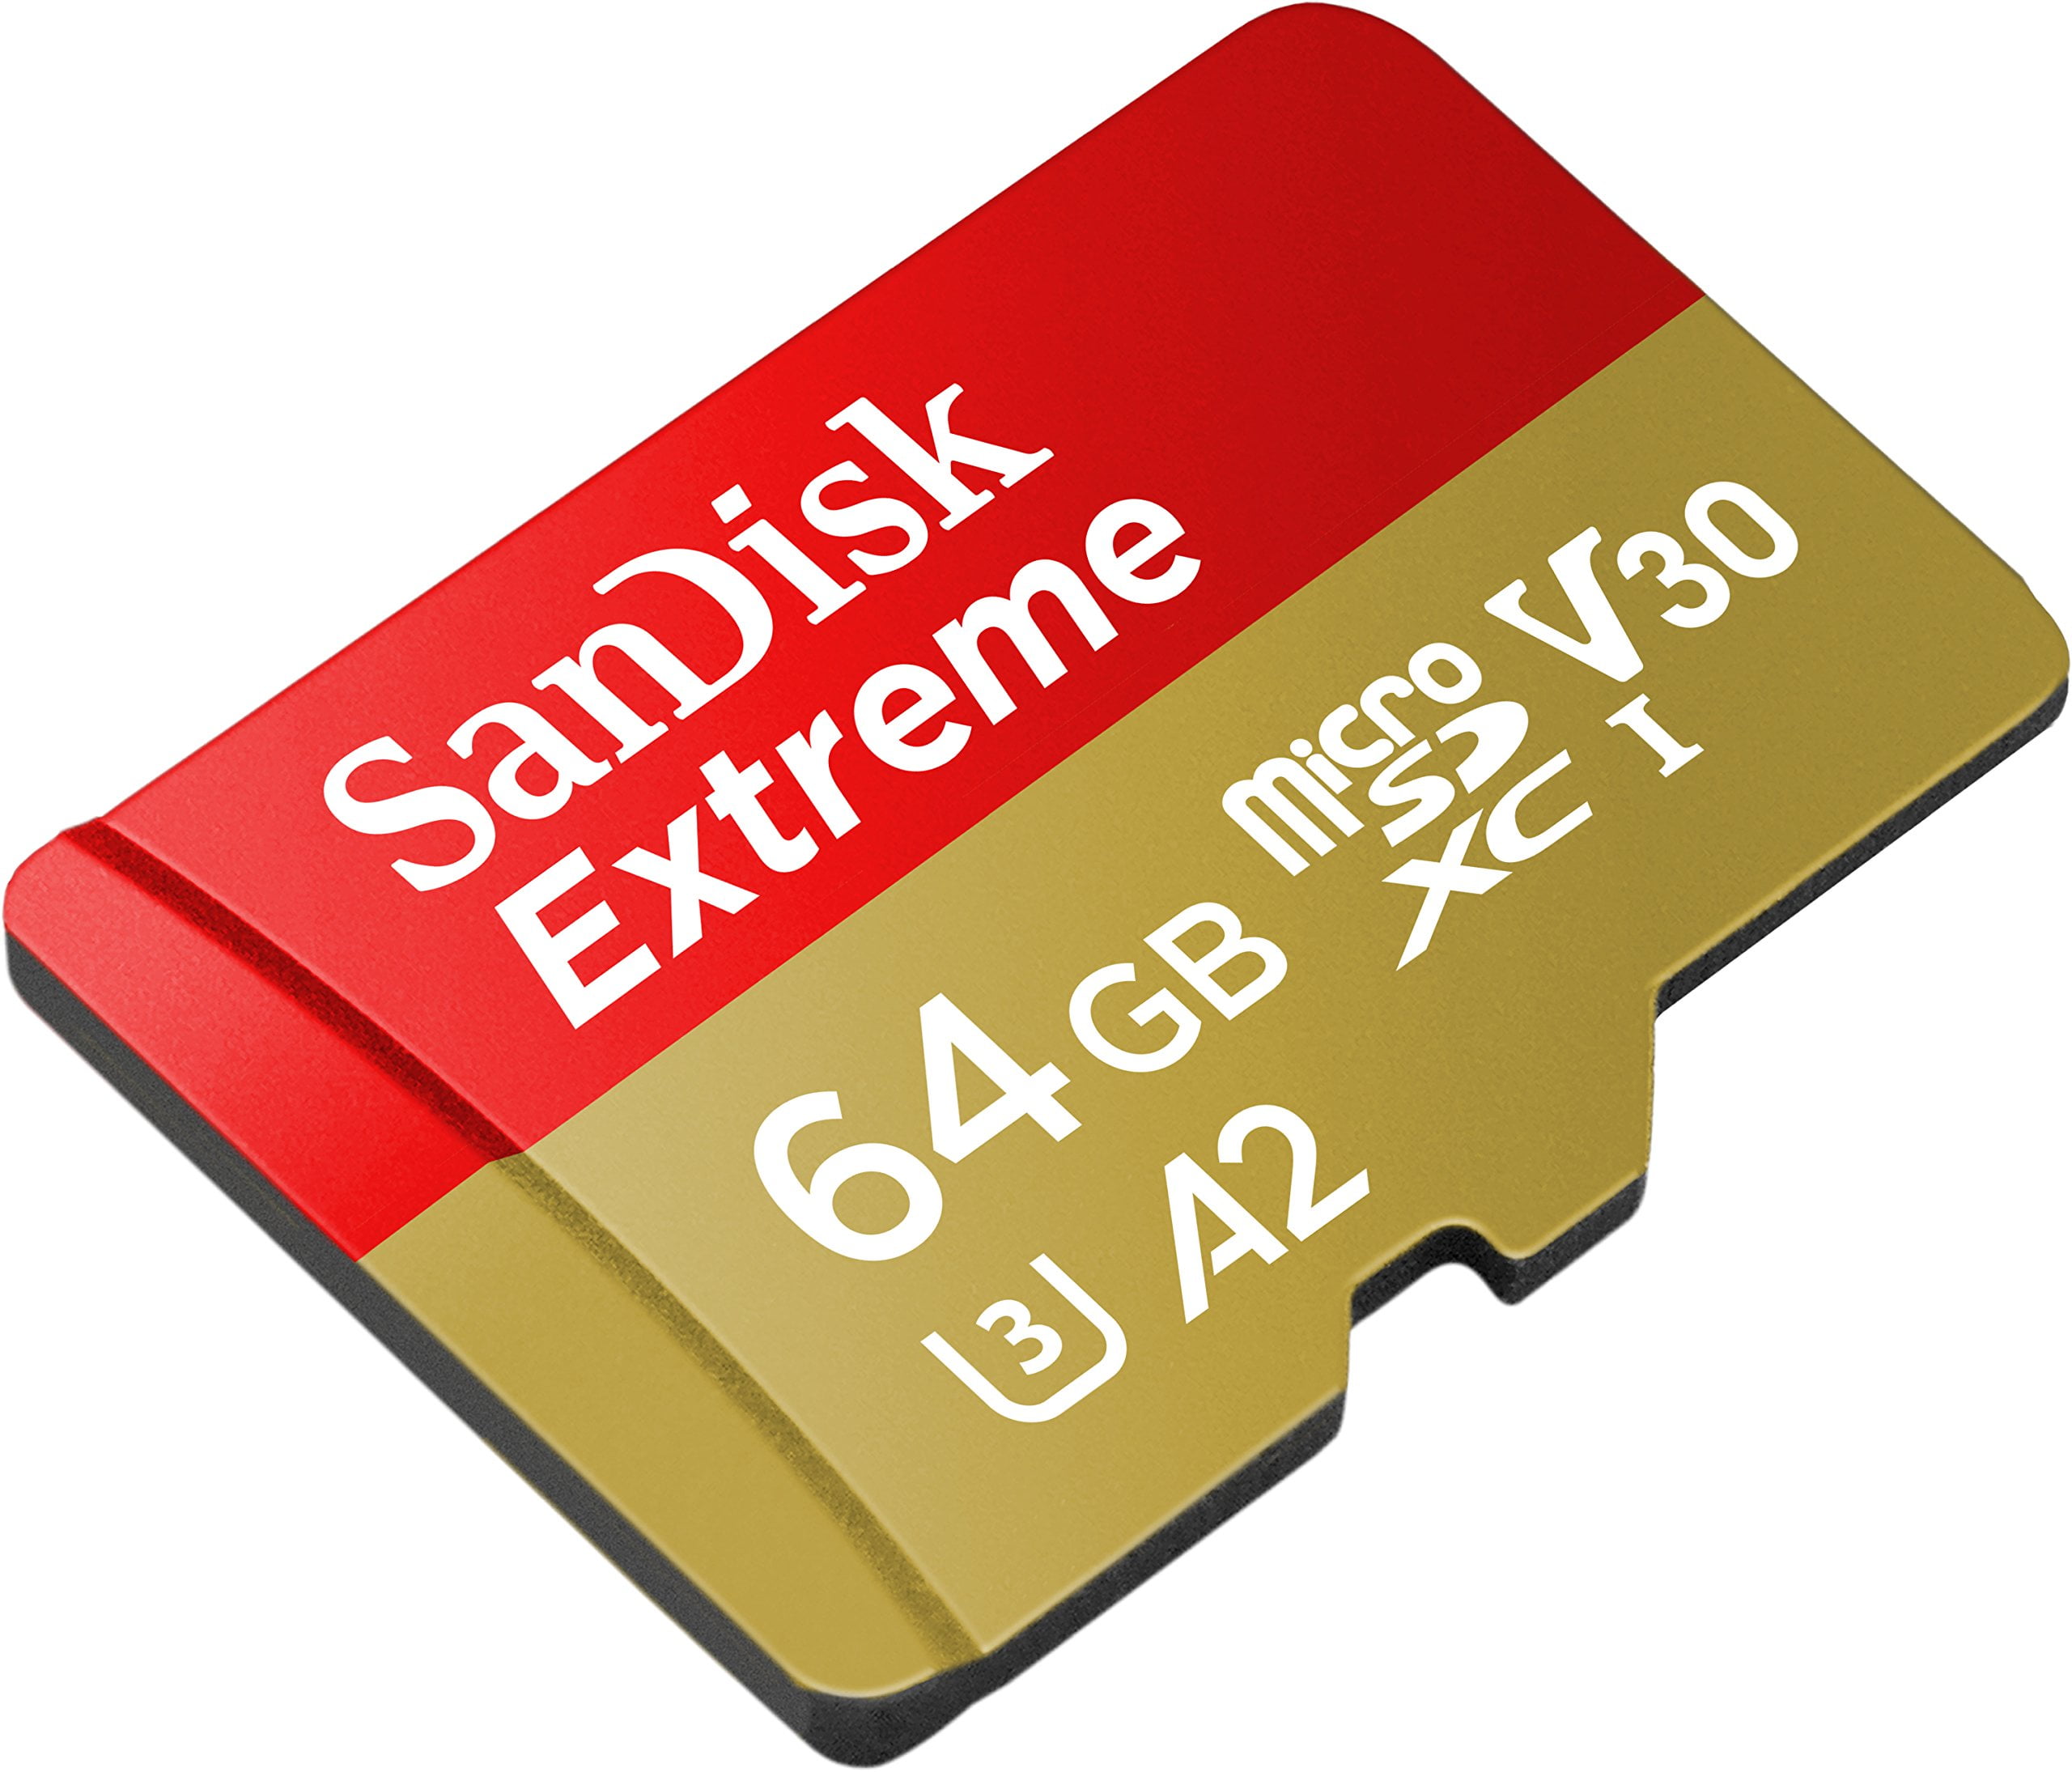 SanDisk Extreme SD UHS-I Card, V30, U3, 4K UHD